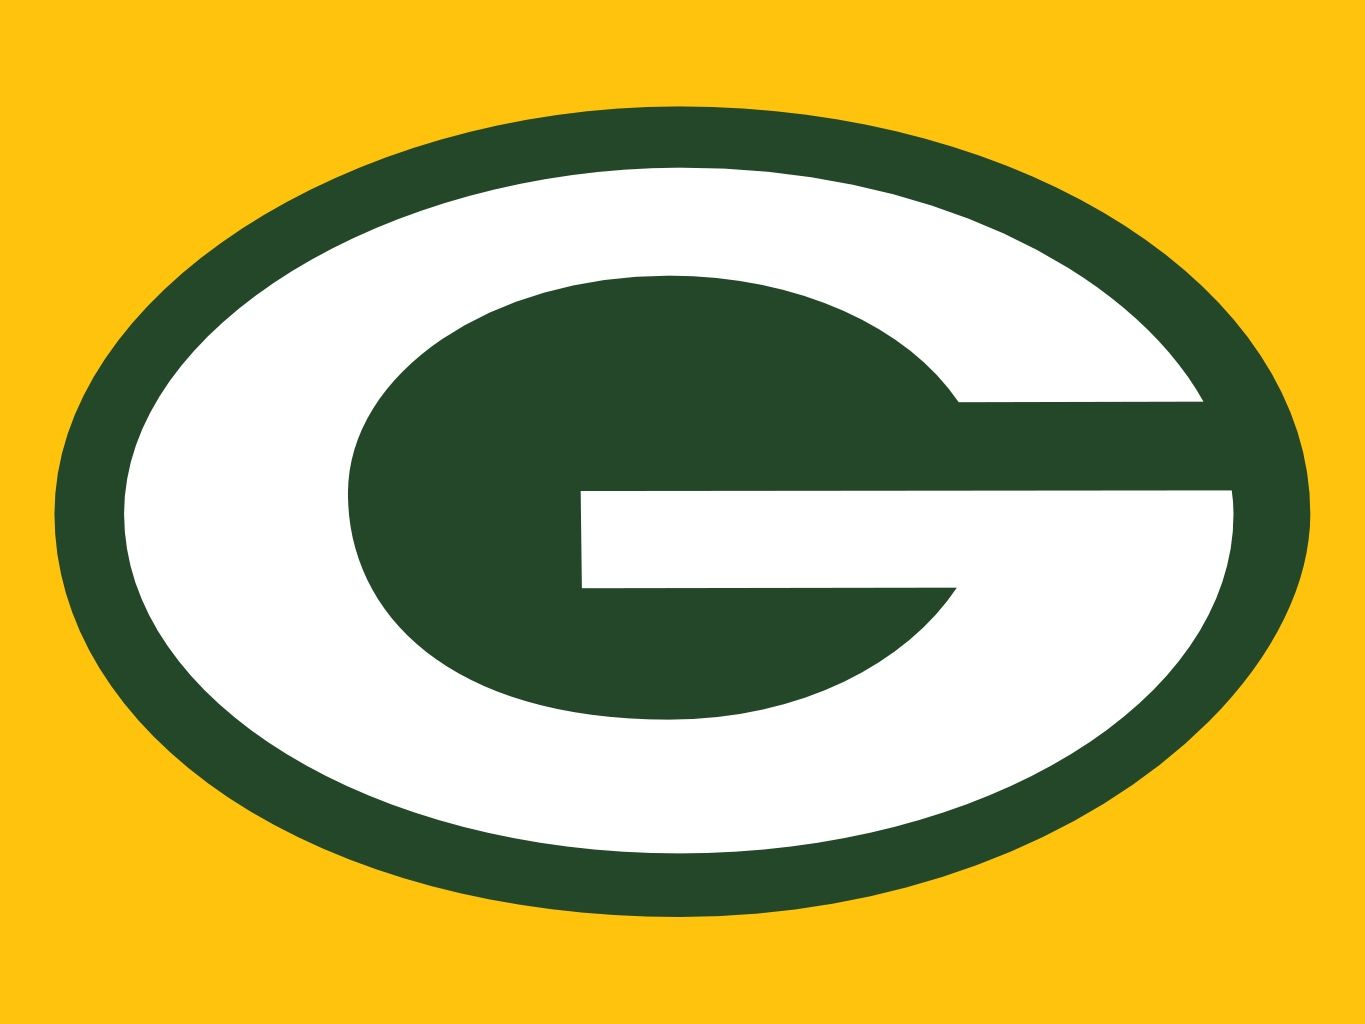 Green Bay Packer Logo Clip Art - Clipart Best | Taylor | Pinterest - Free Printable Green Bay Packers Logo